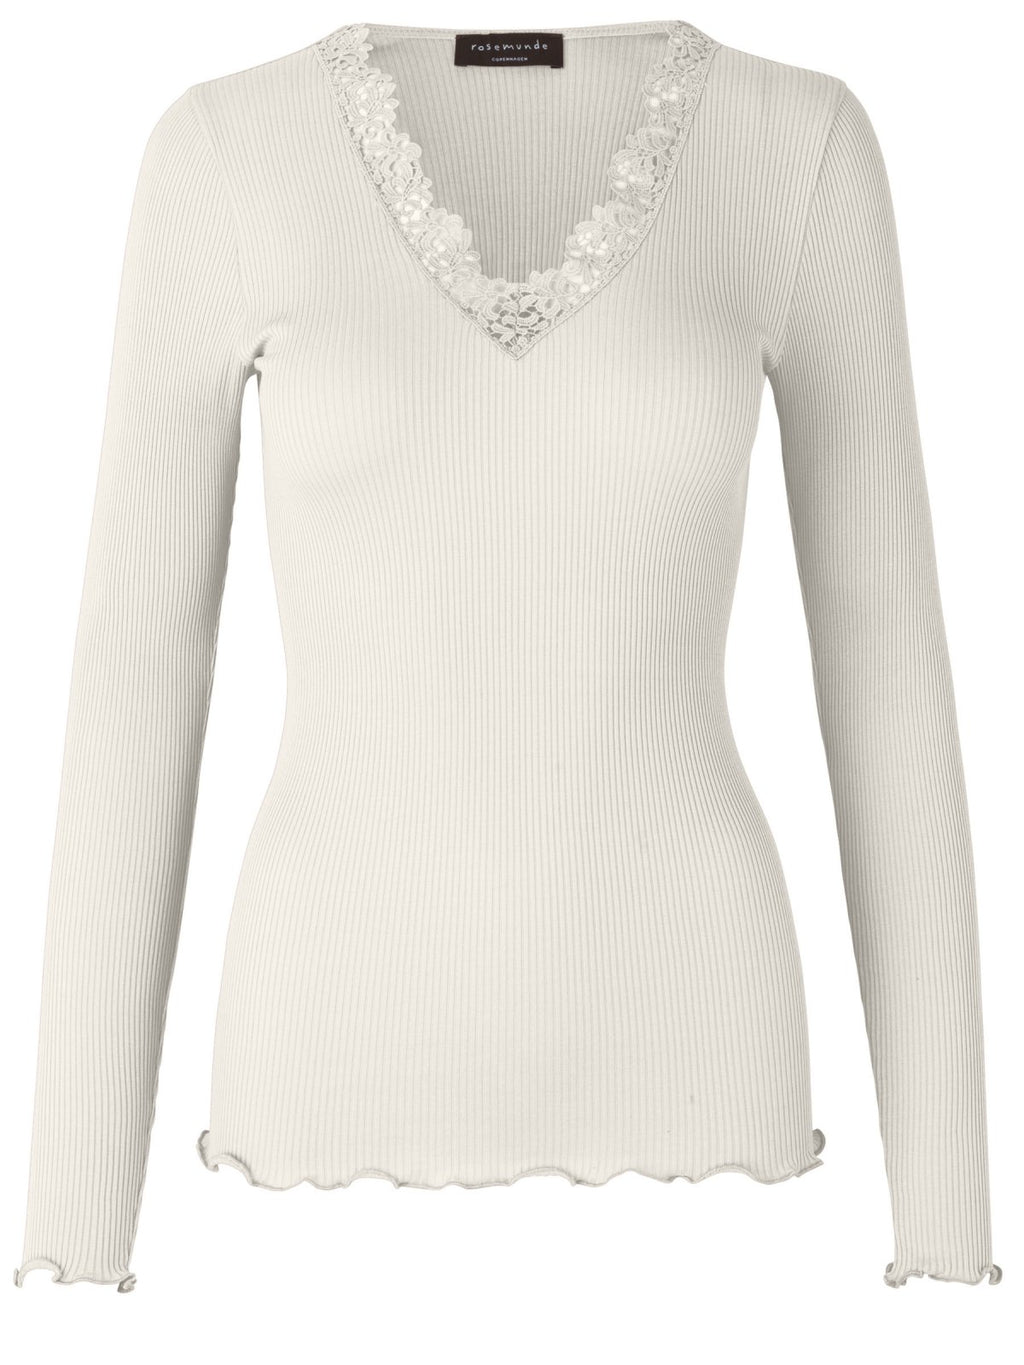 Rosemunde - silk blouse with crochet lace